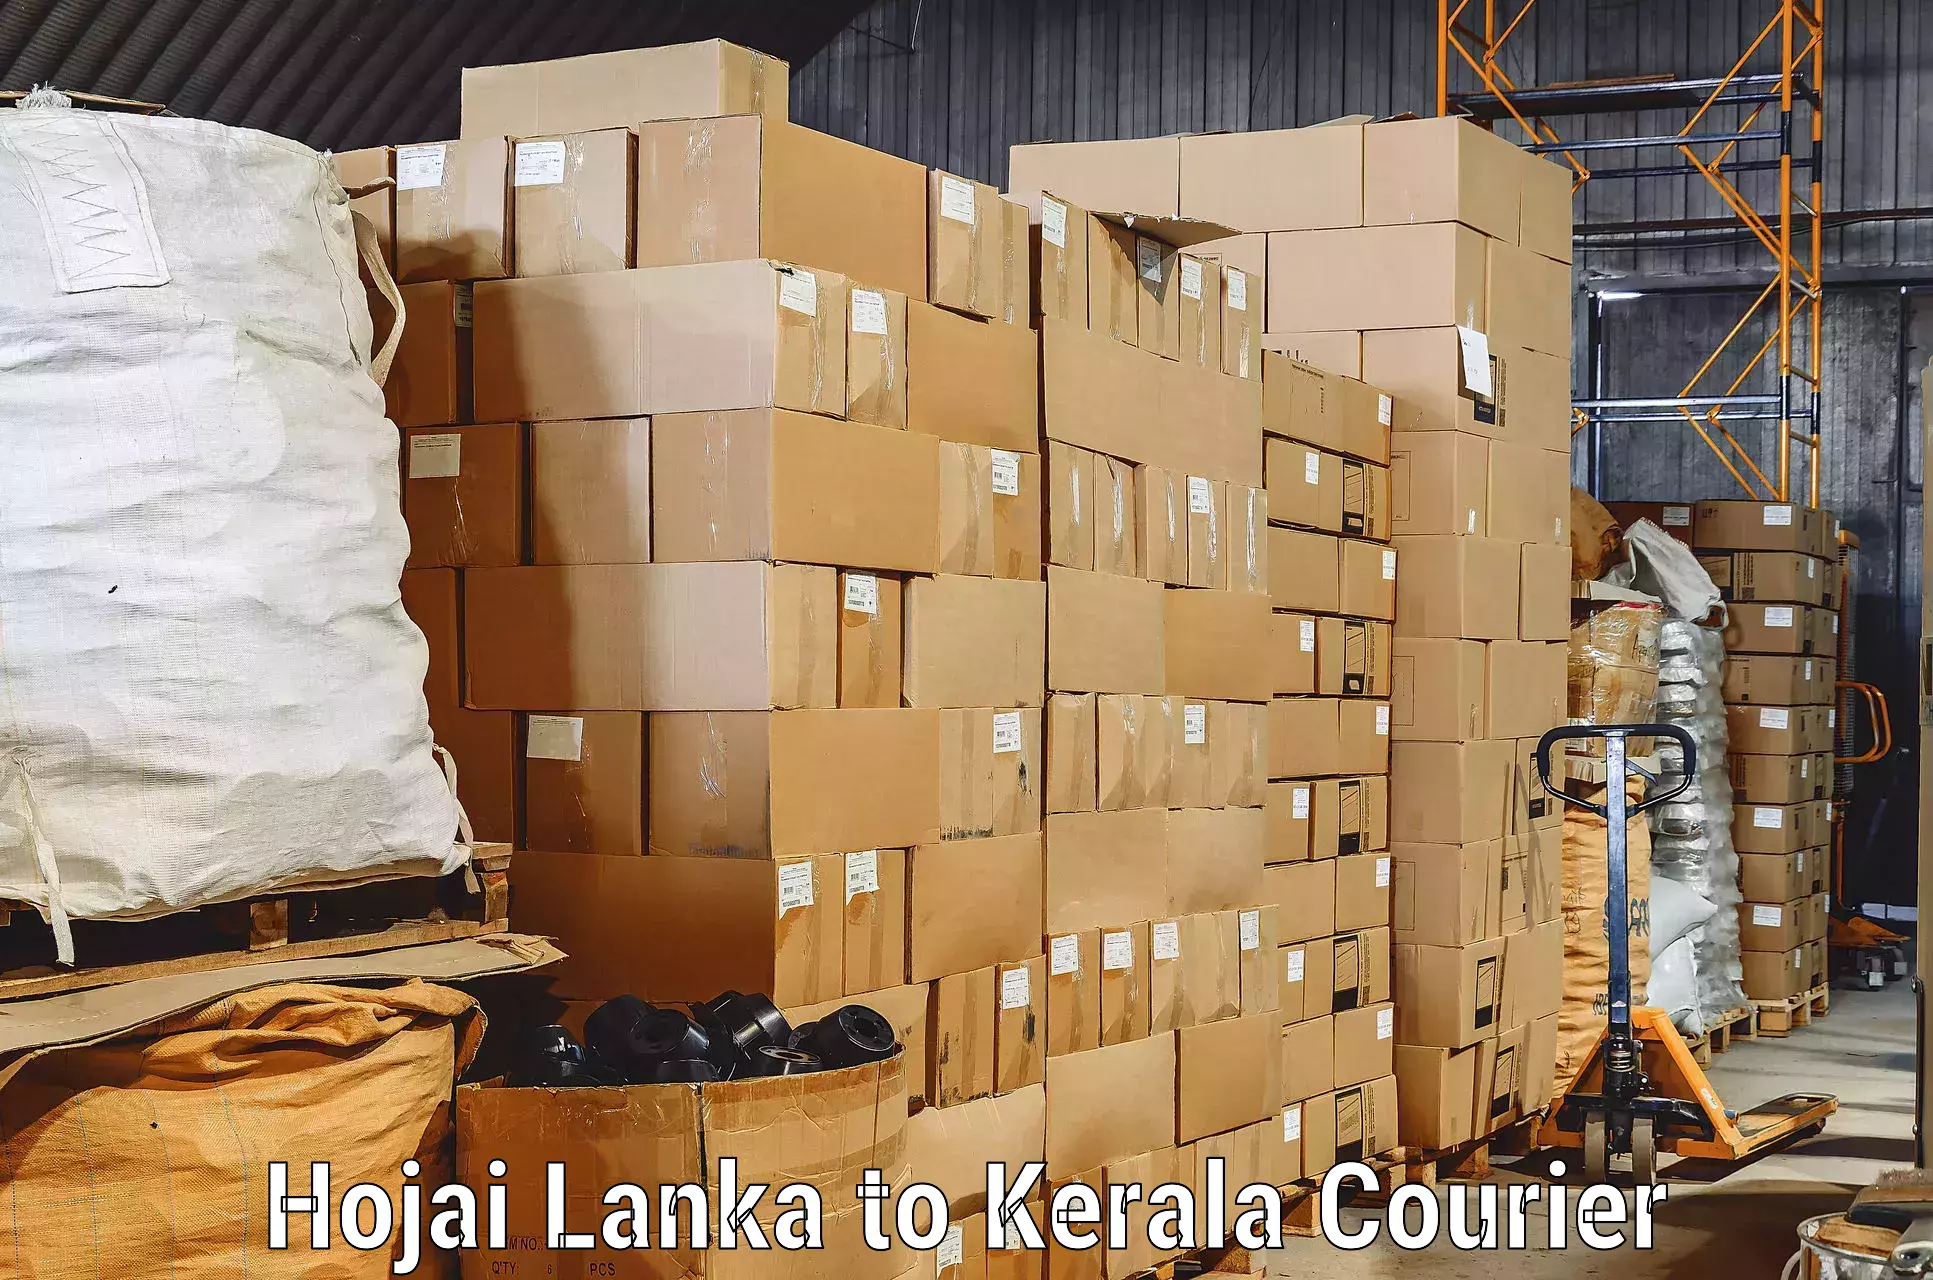 Budget-friendly movers Hojai Lanka to Kerala